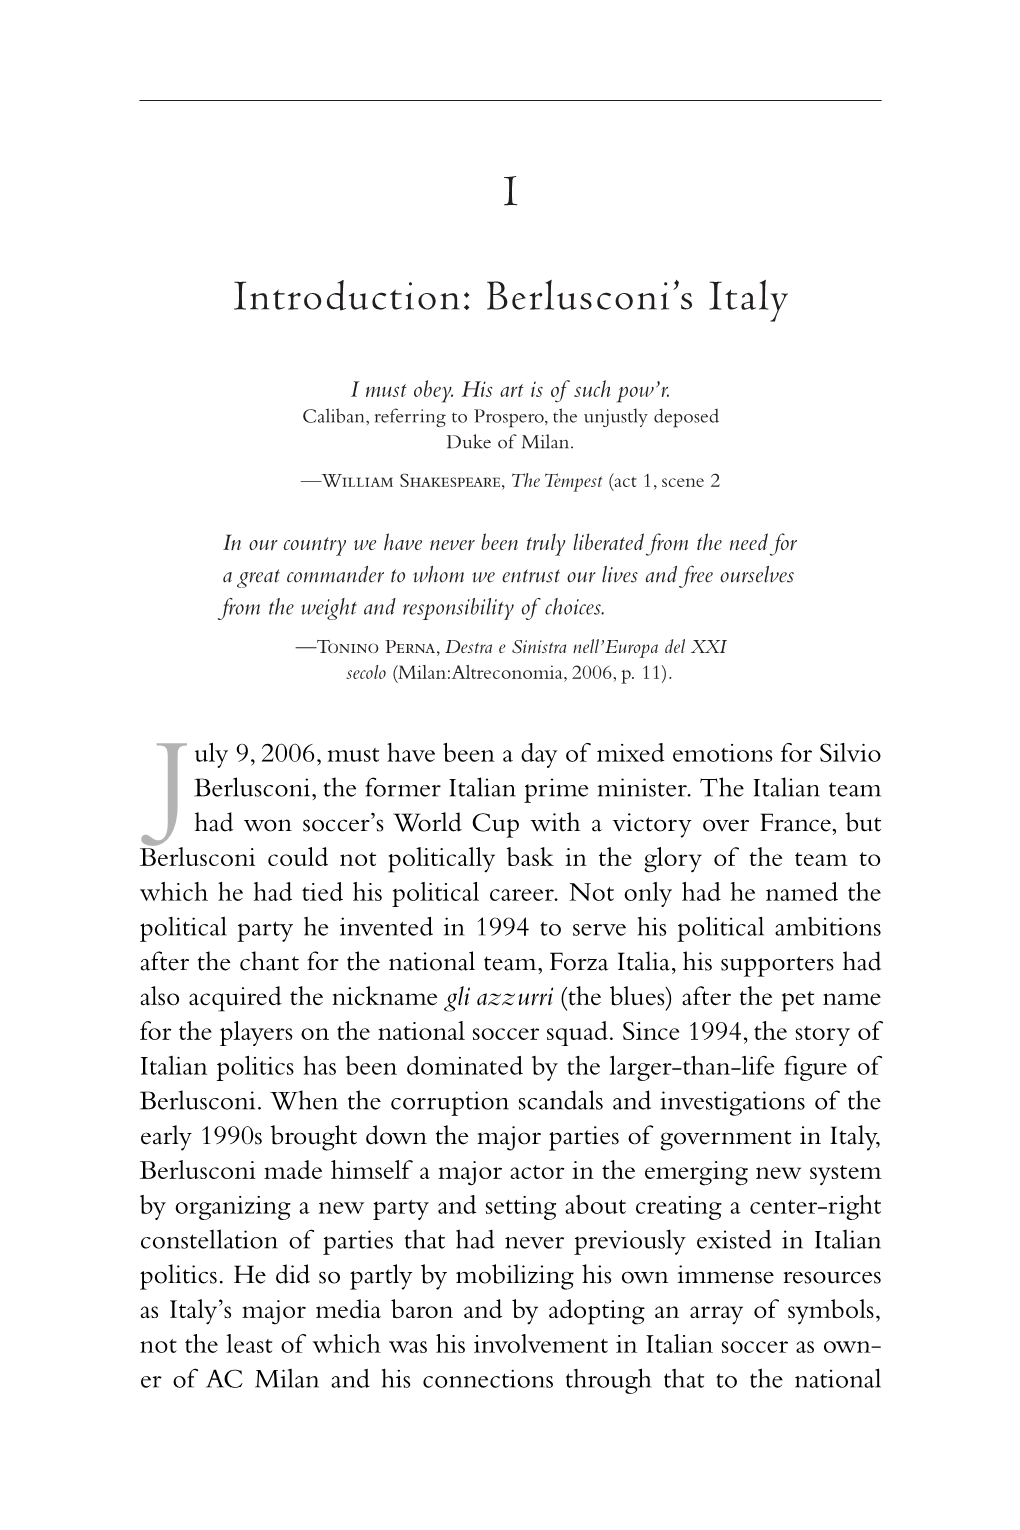 Introduction: Berlusconi's Italy